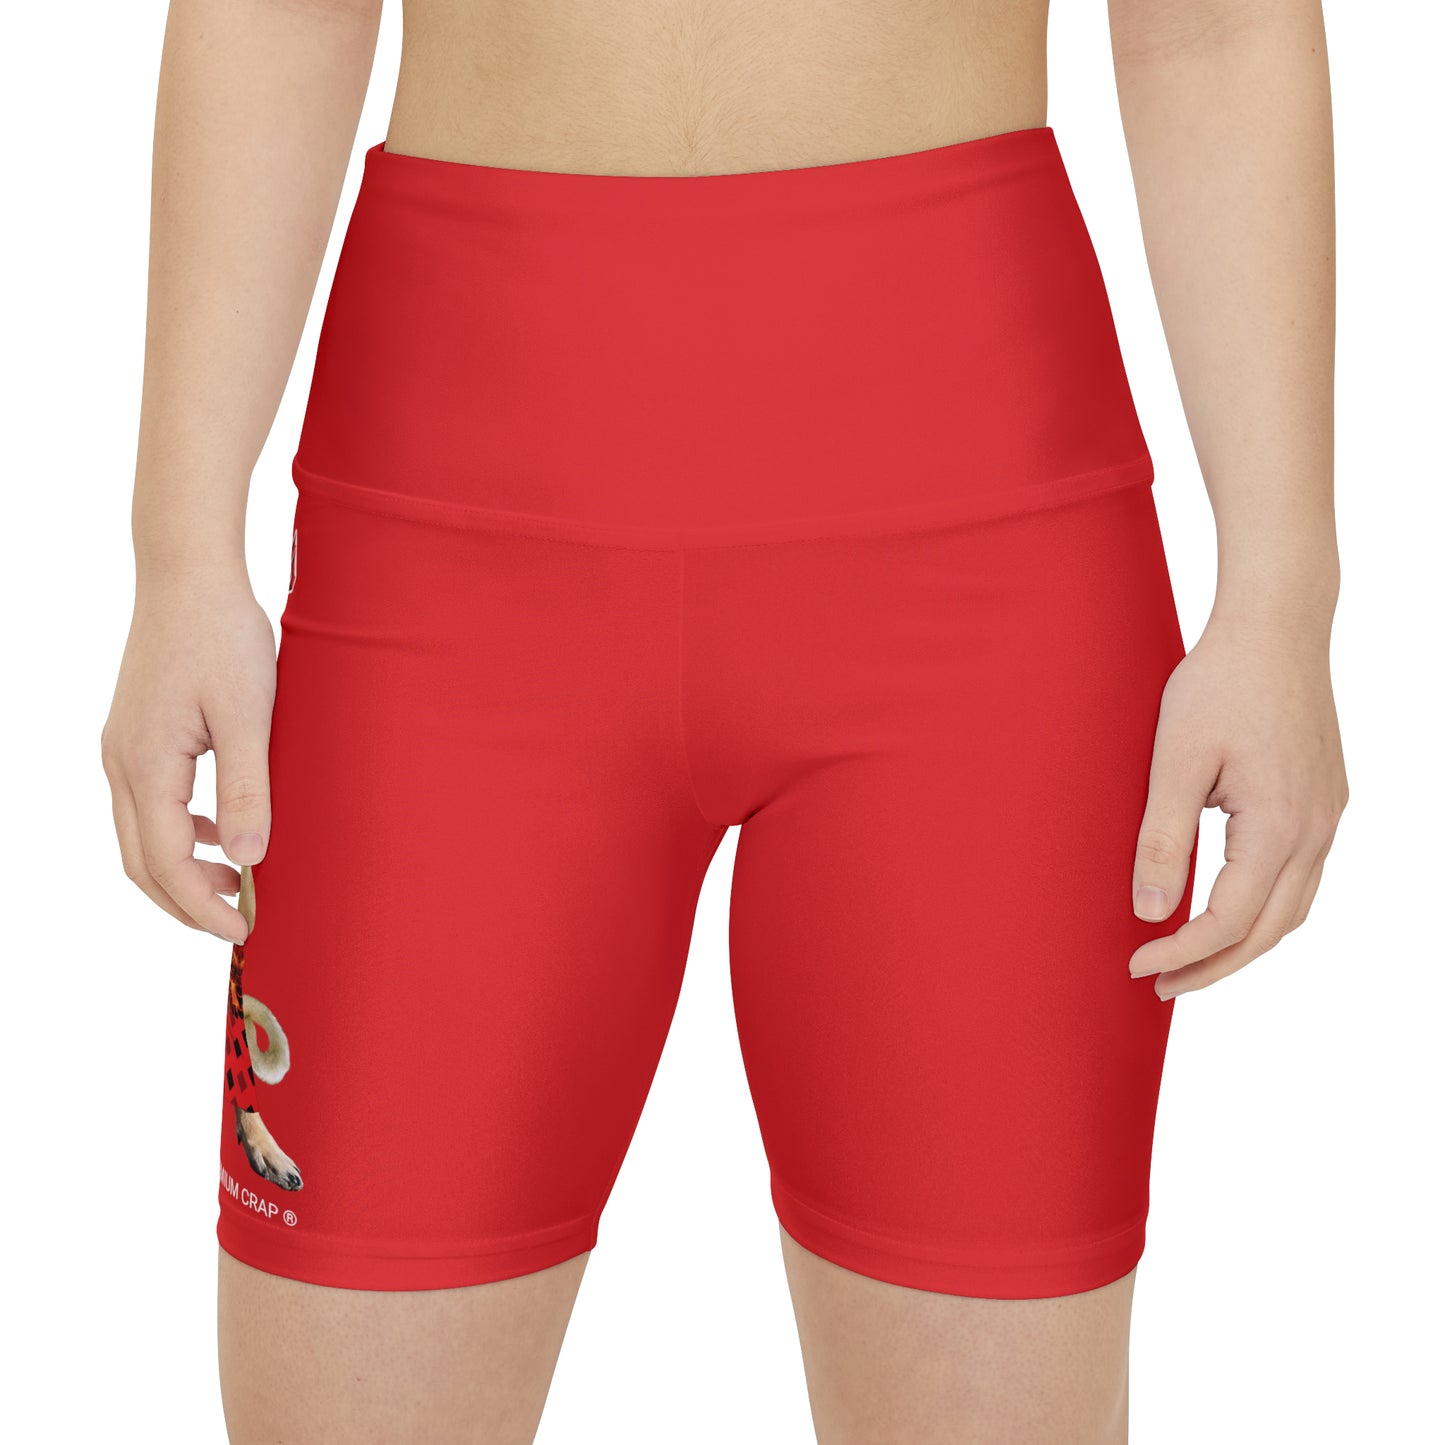 Premium Crap II Women's Workout Shorts  - Red